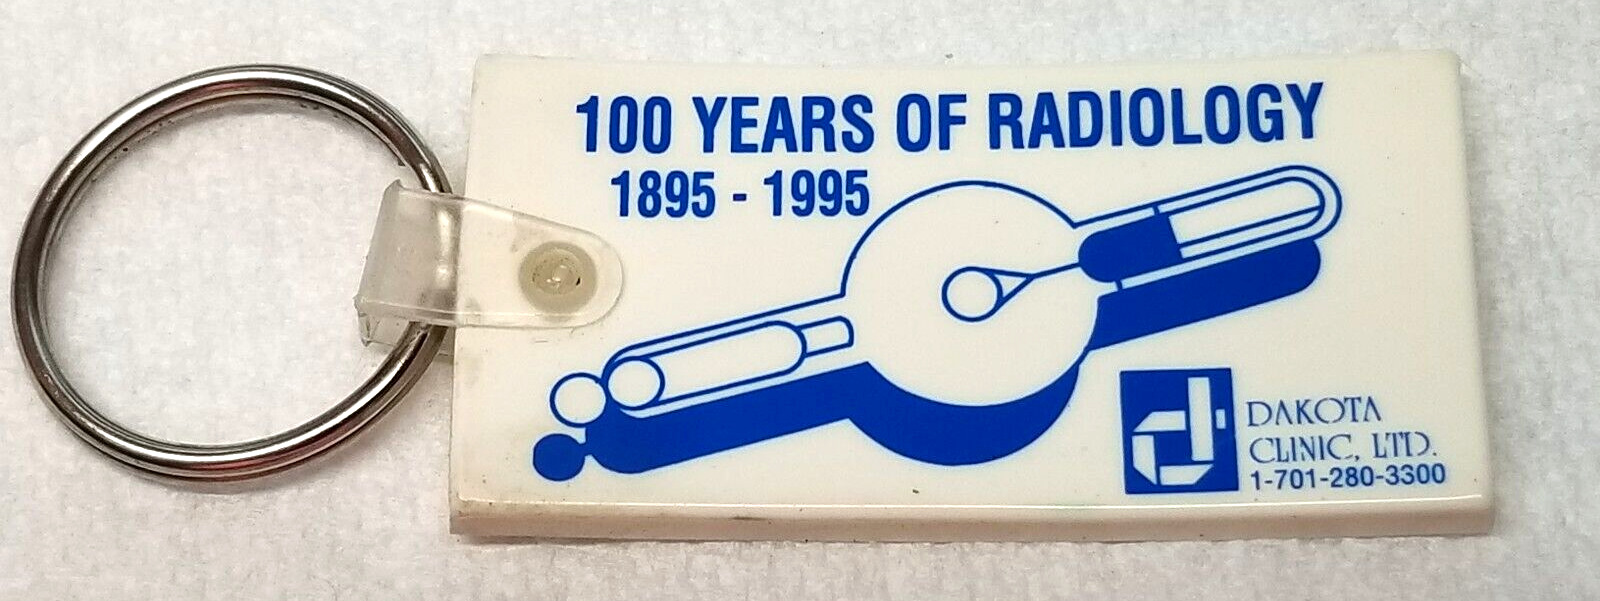 North Dakota Clinic Keychain 100 Years of Radiology Medical Plastic Vintage